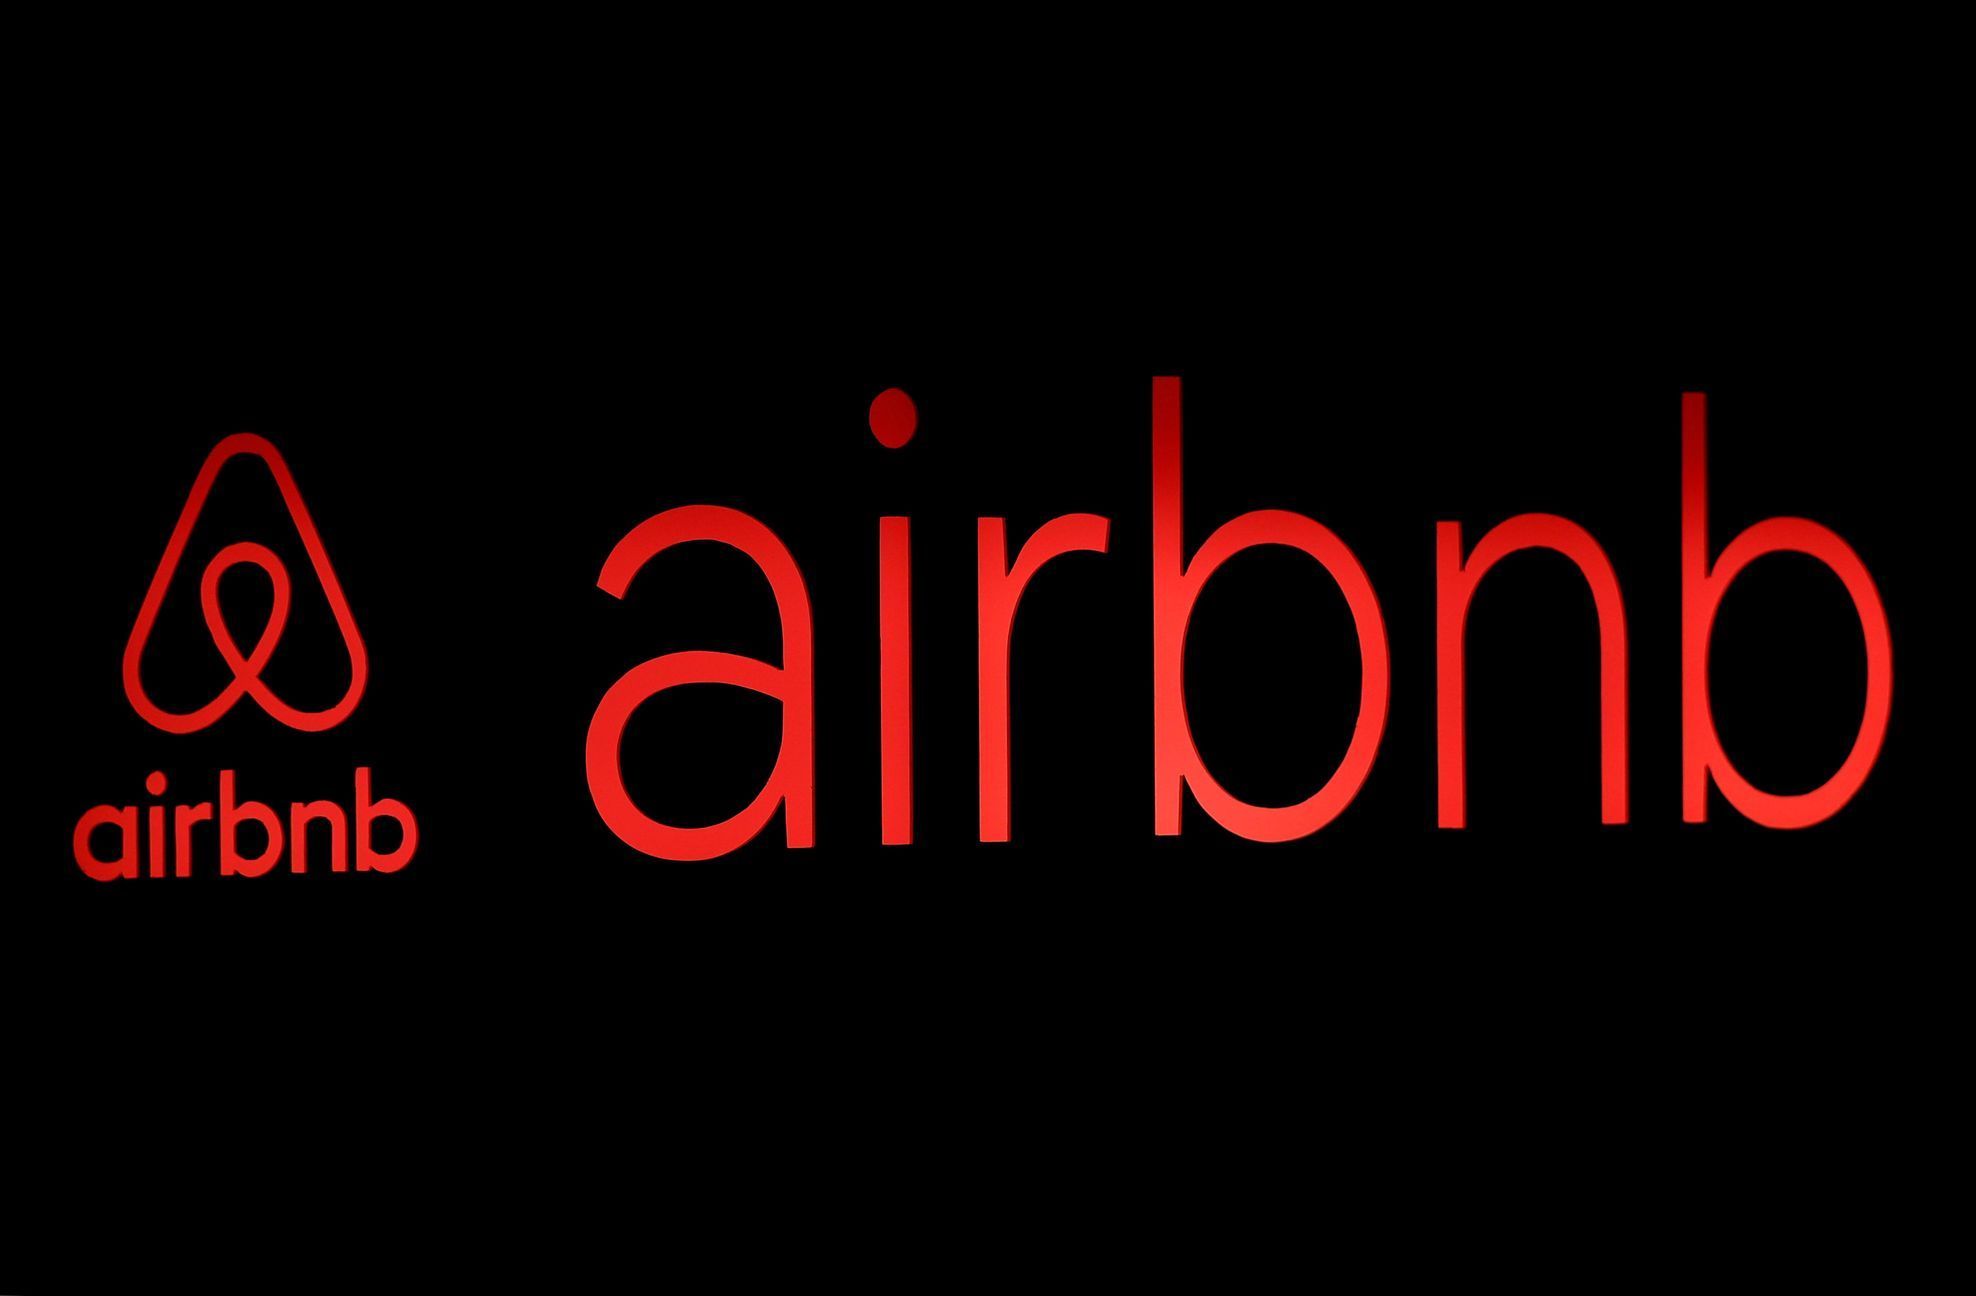 Airbnb logo ilustrační foto